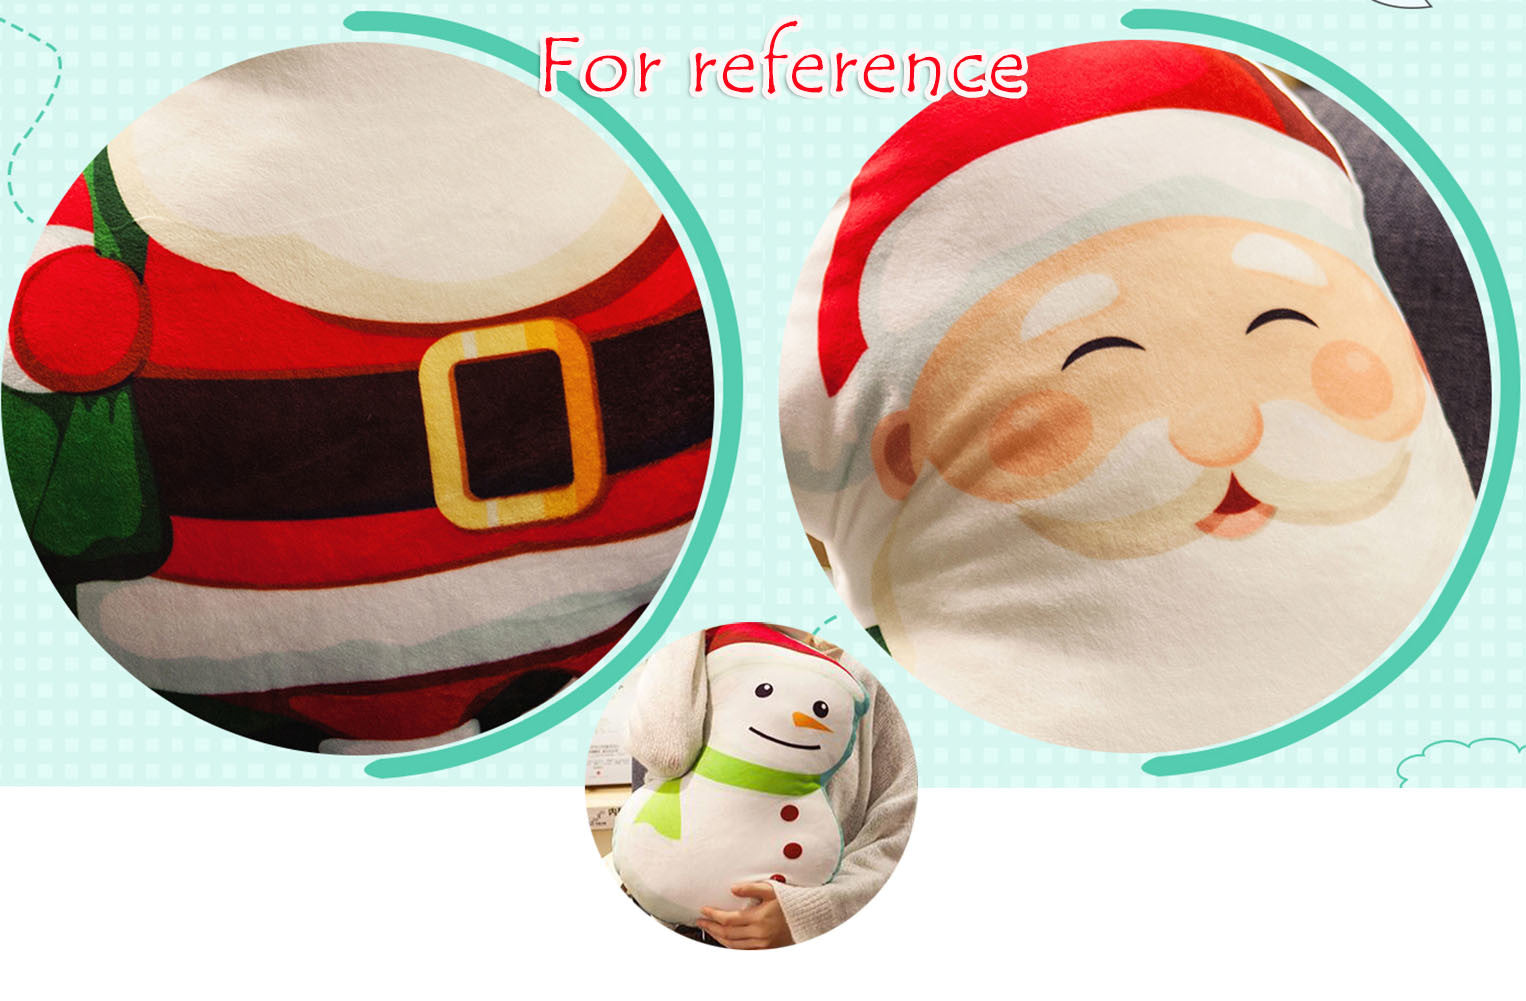 Cute Cartoon Snow Man Plush Pillow Toy for Christmas Kids Festival Gift Home Decor